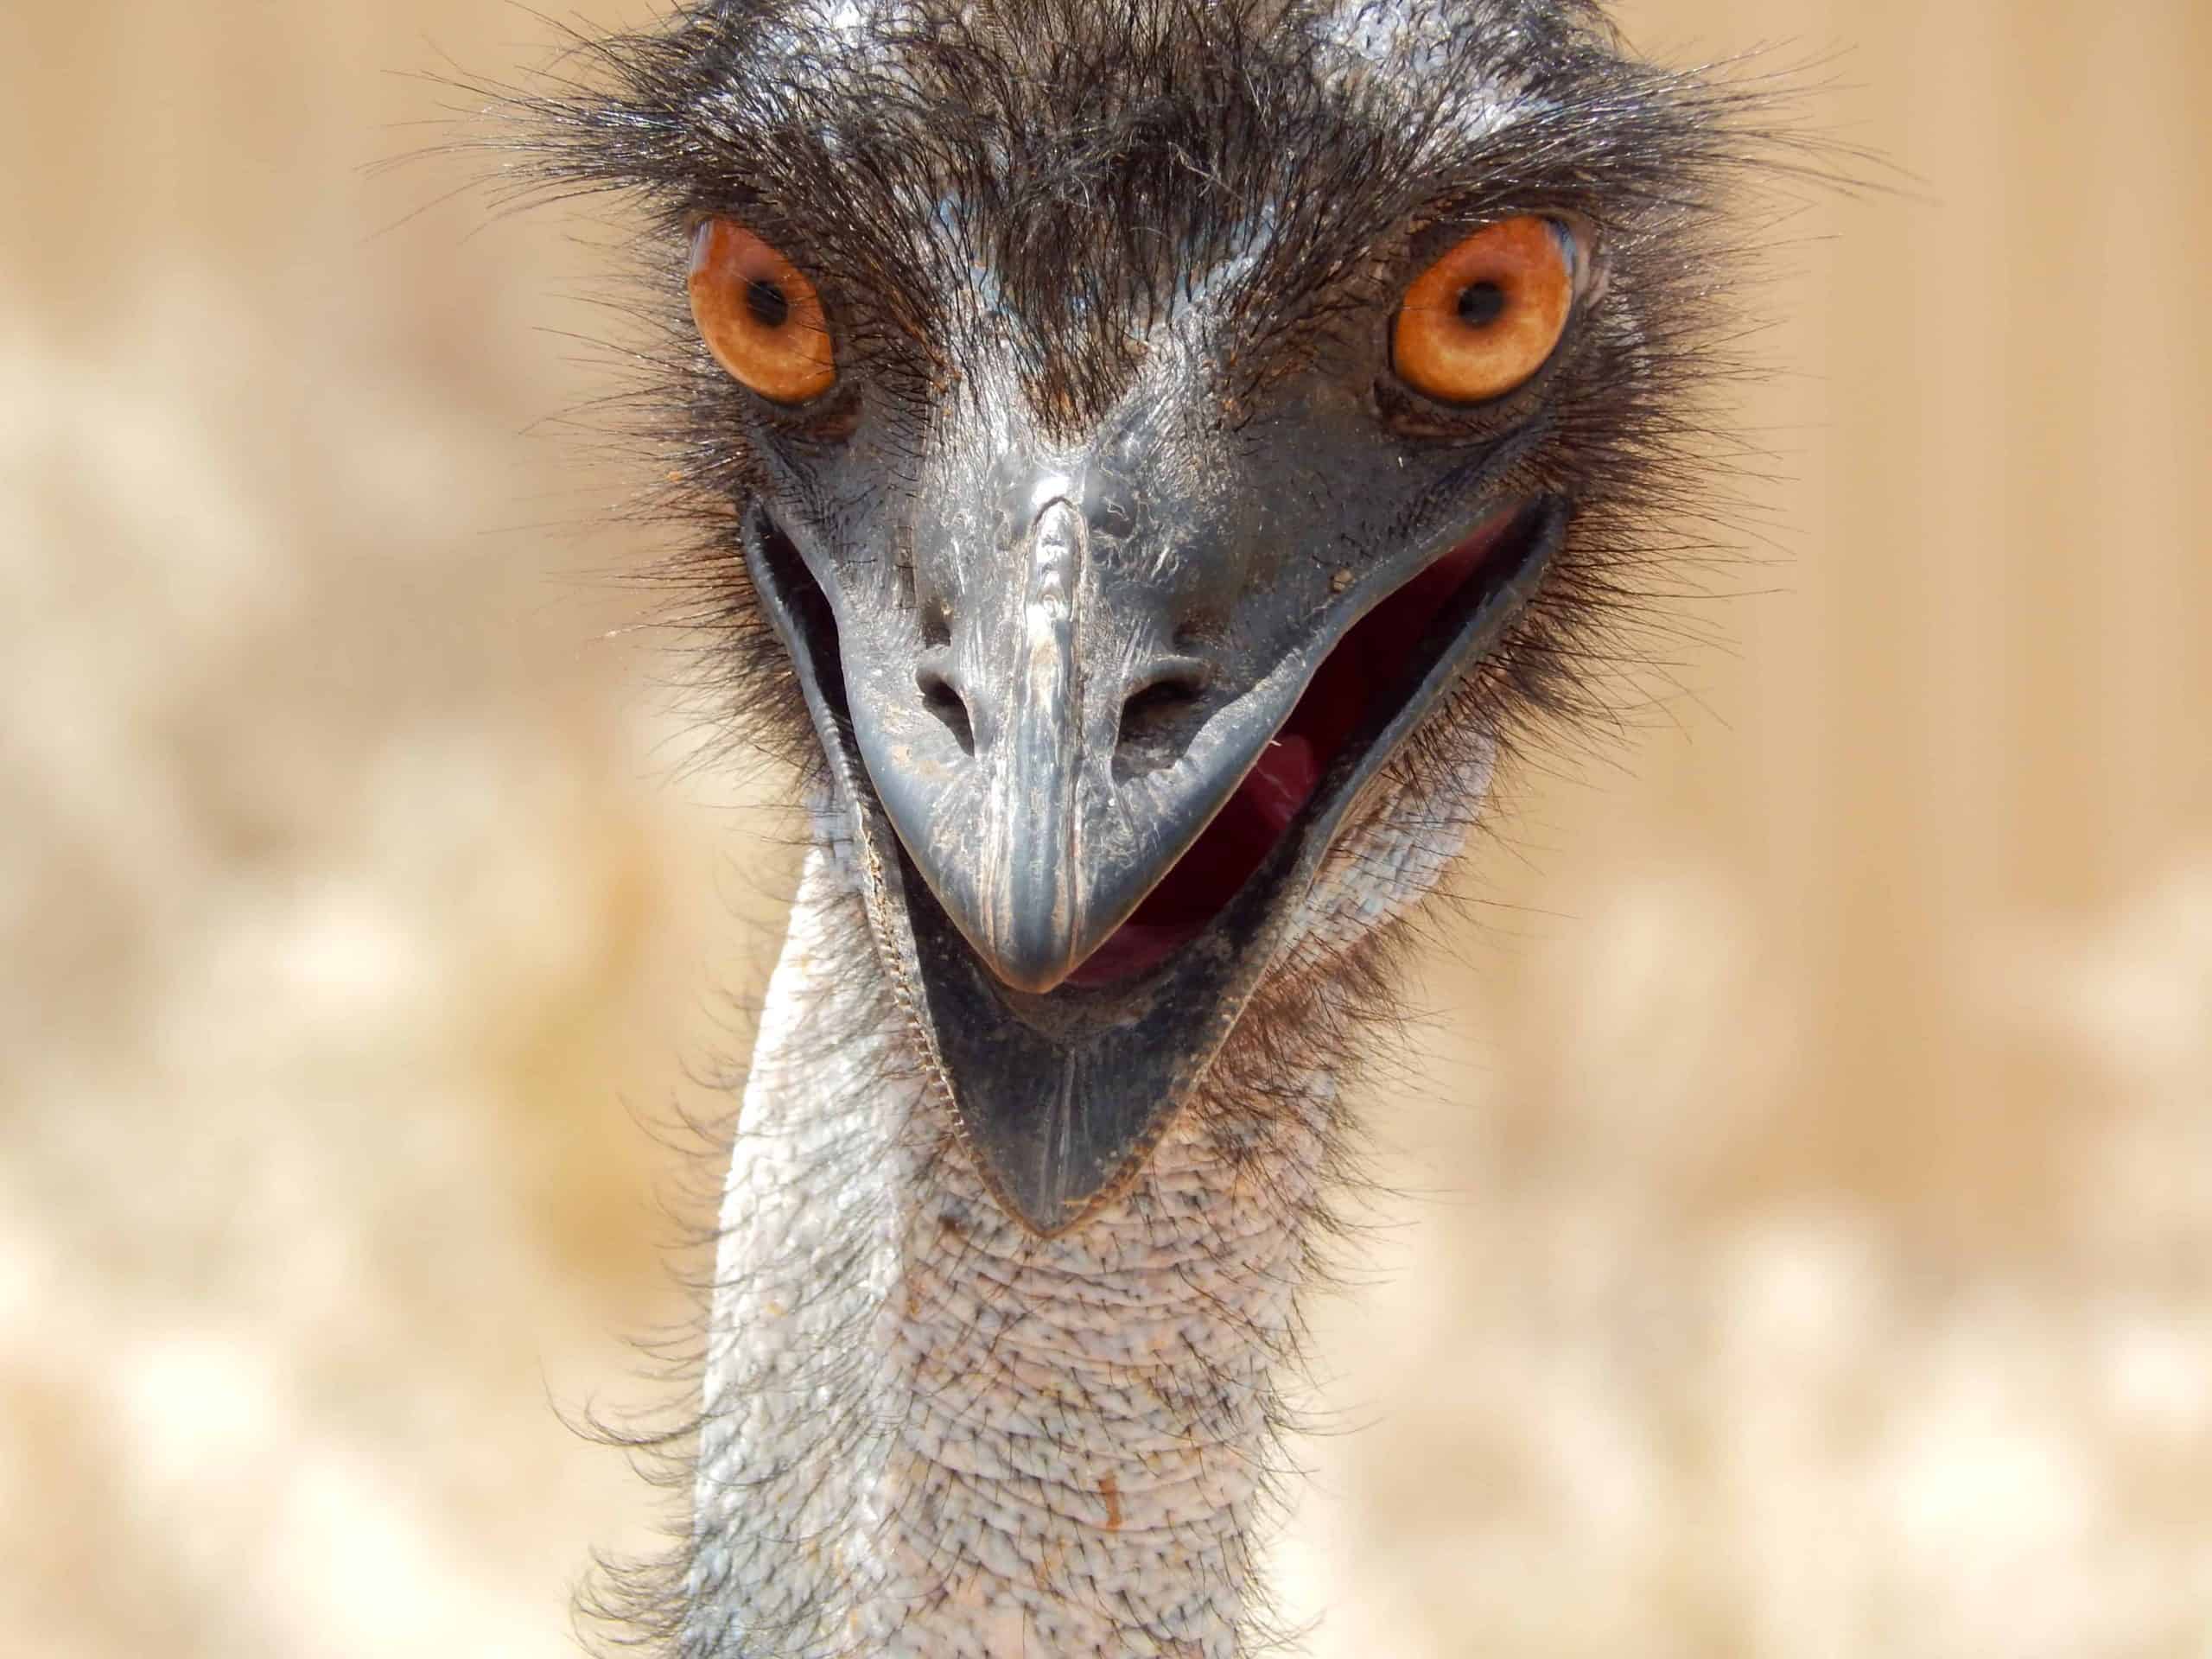 An emu looking at the camera.